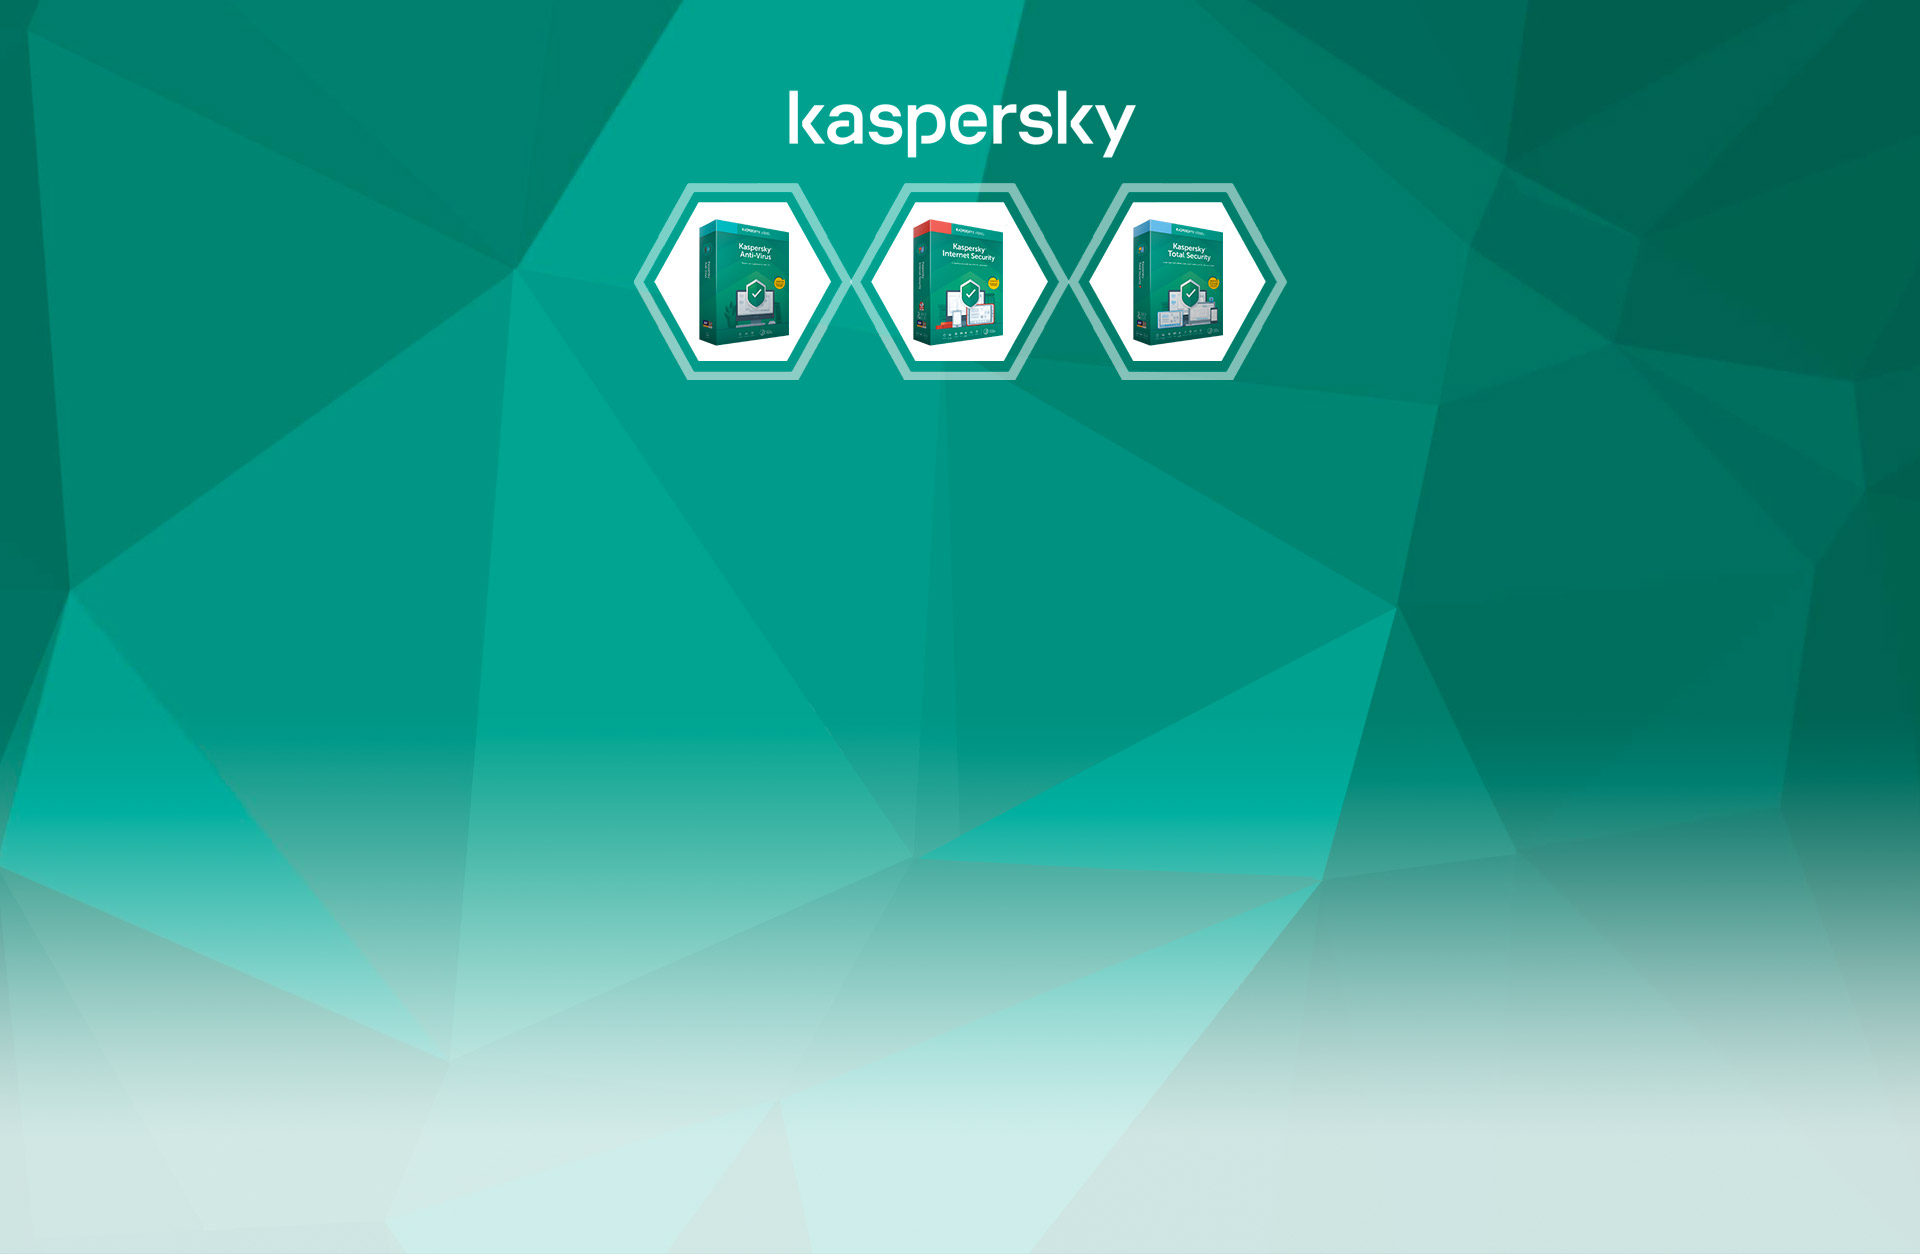 Carousel Kaspersky